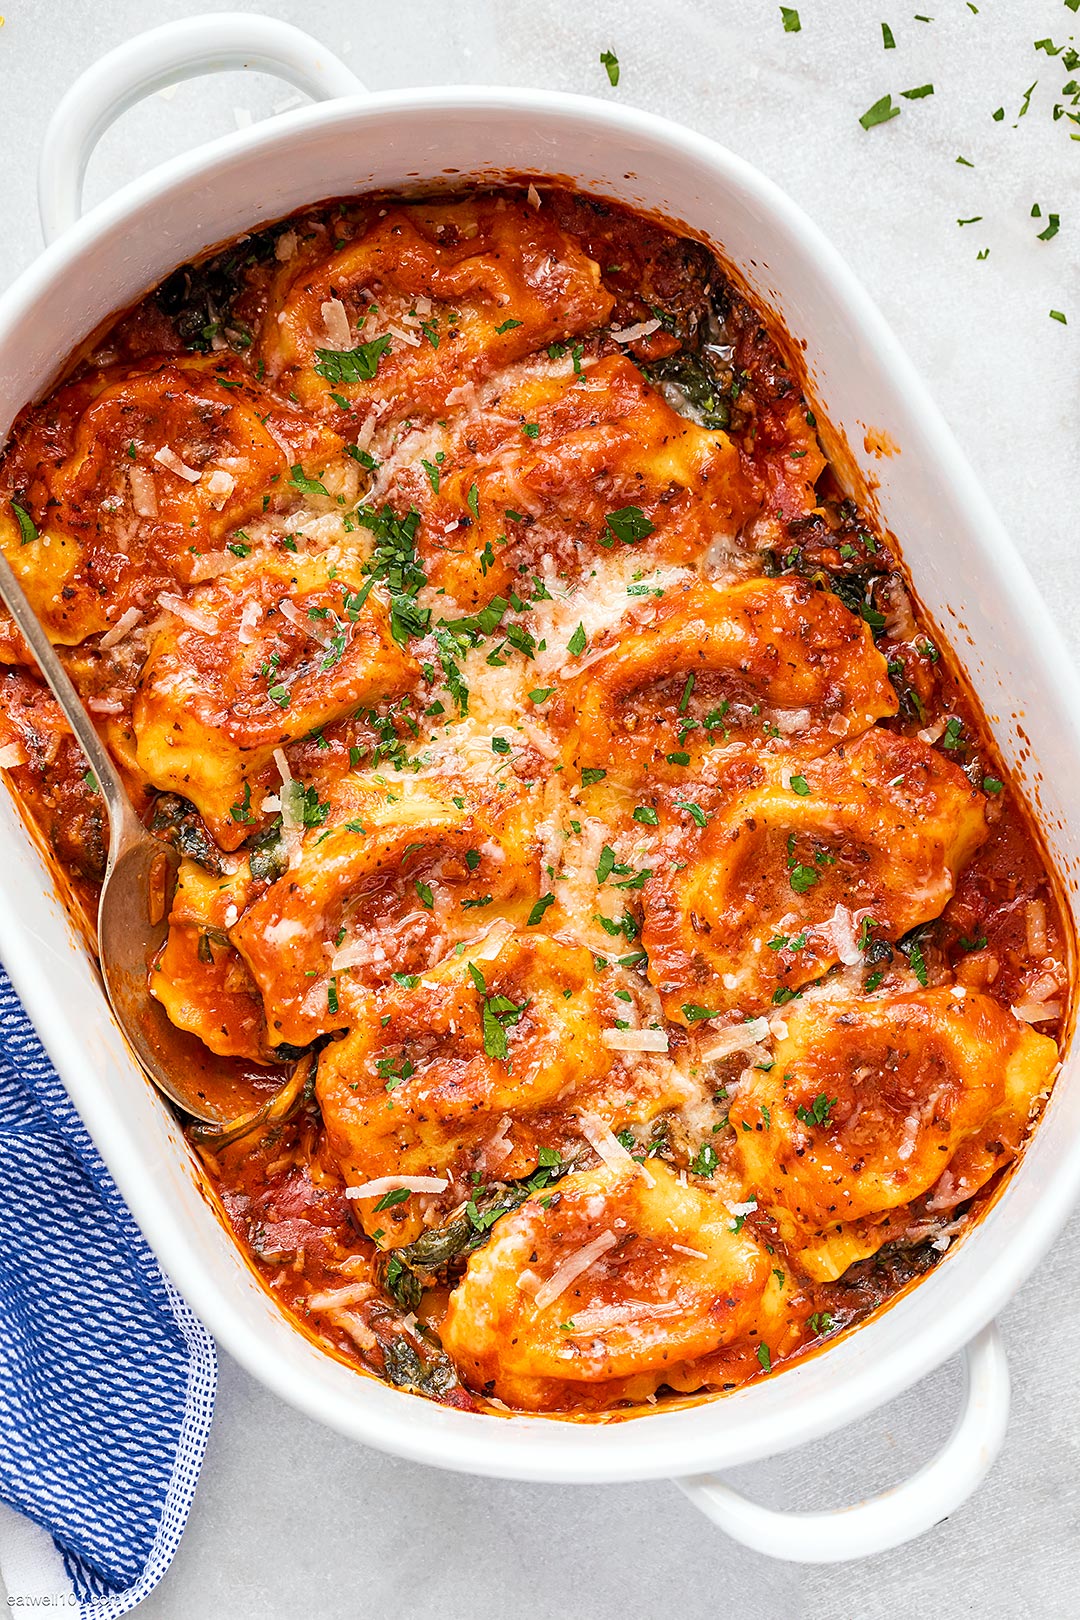 Easy Tomato Spinach Ravioli Bake Recipe – Baked Ravioli Recipe — Eatwell101